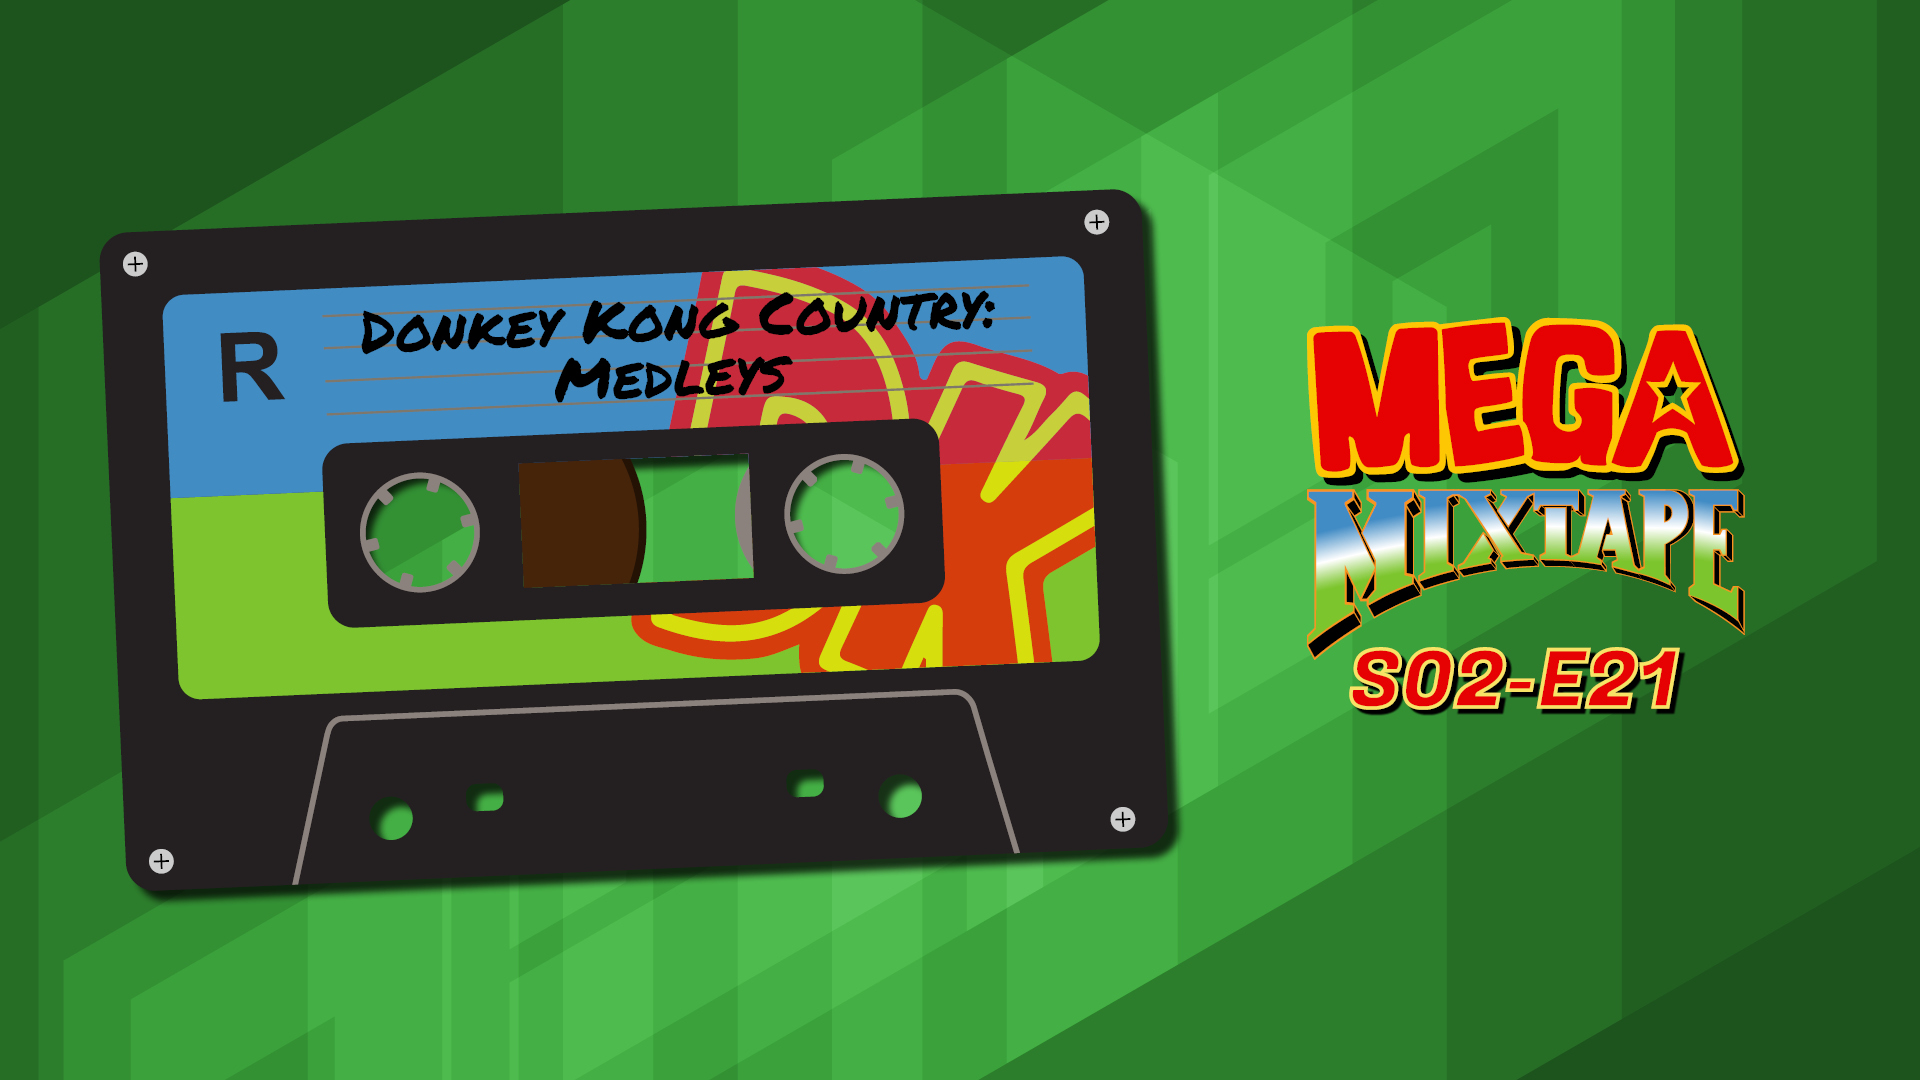 S02-E21: Medleys (Donkey Kong Country)